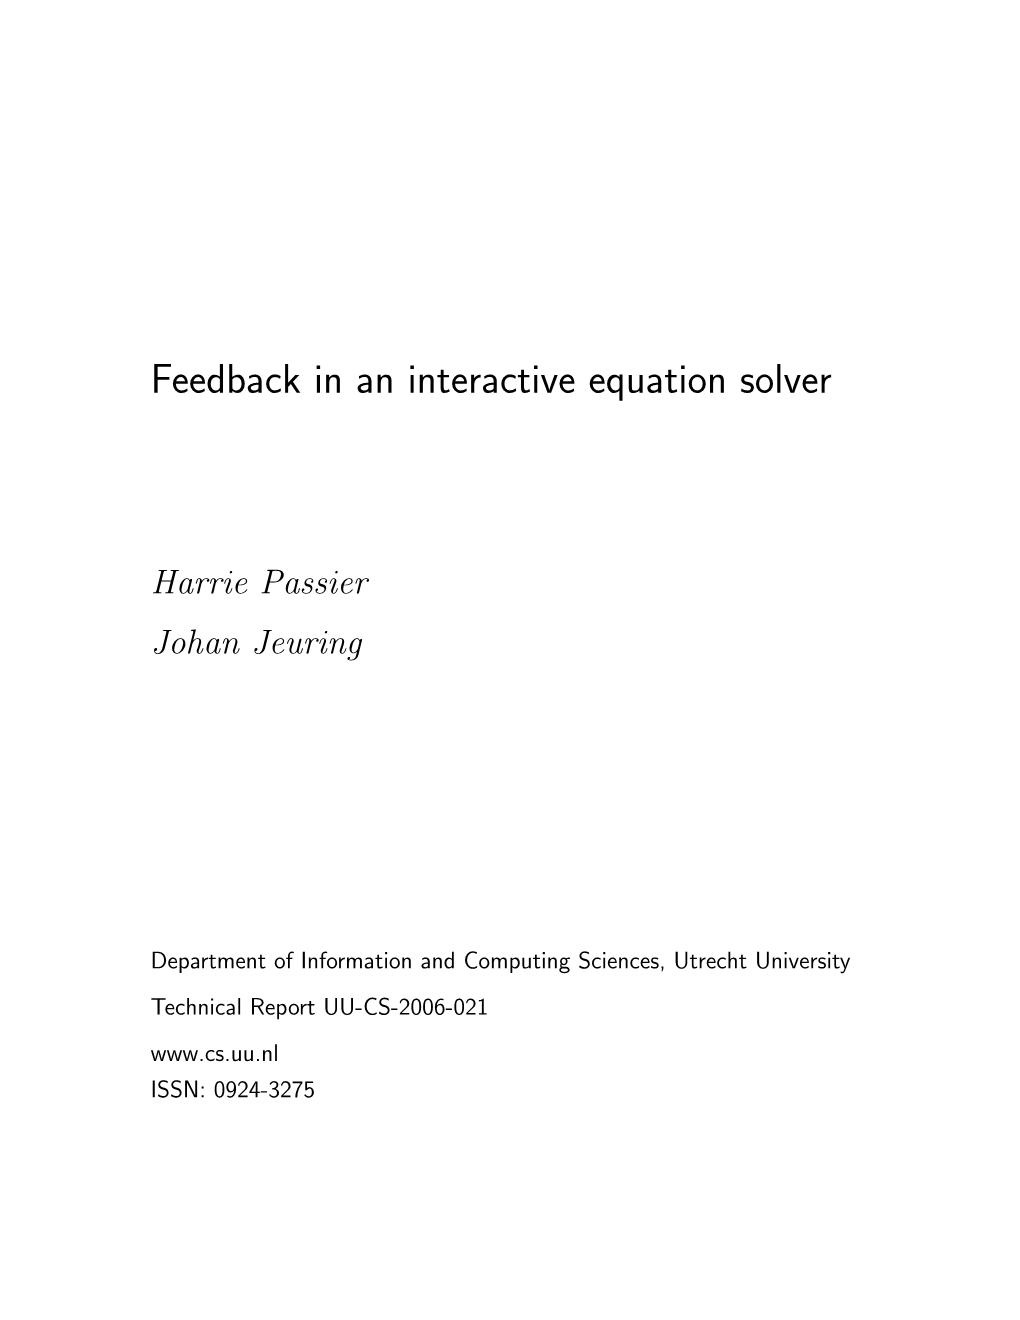 Feedback in an Interactive Equation Solver